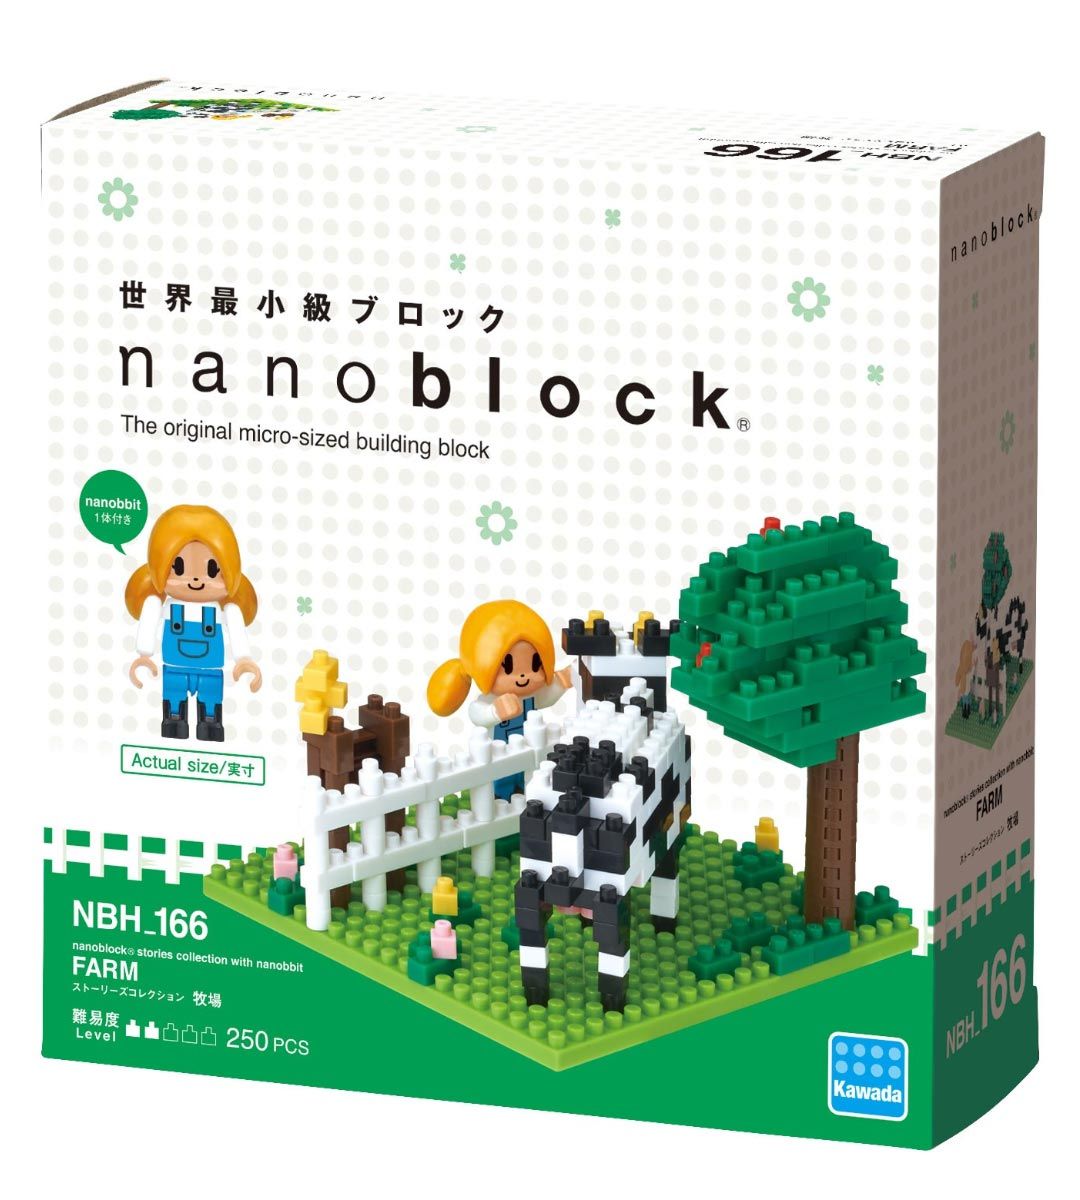 Nanoblock - Farm- Stories collection with nanobbit